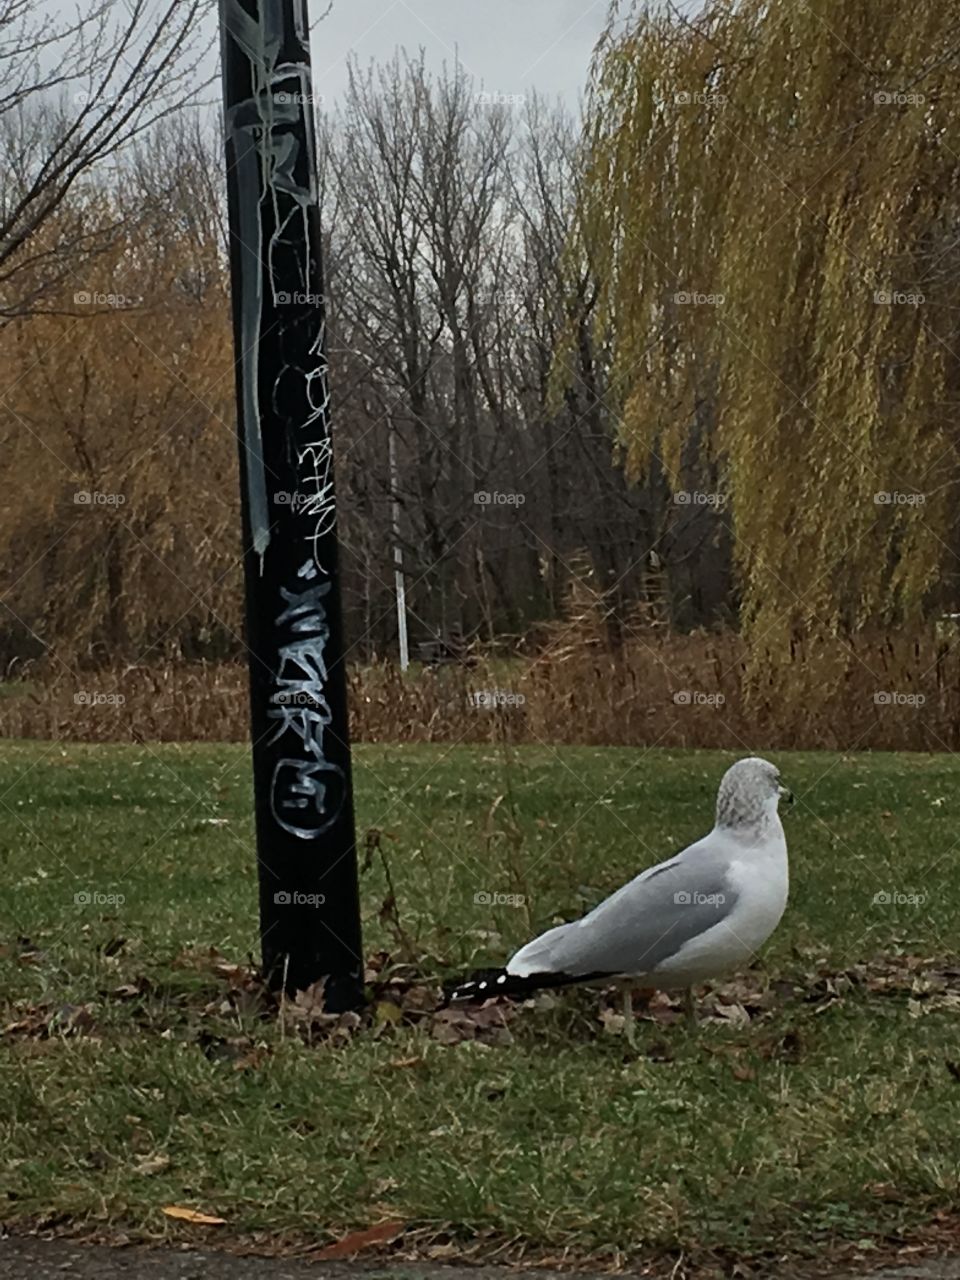 Seagull and graffiti in nature